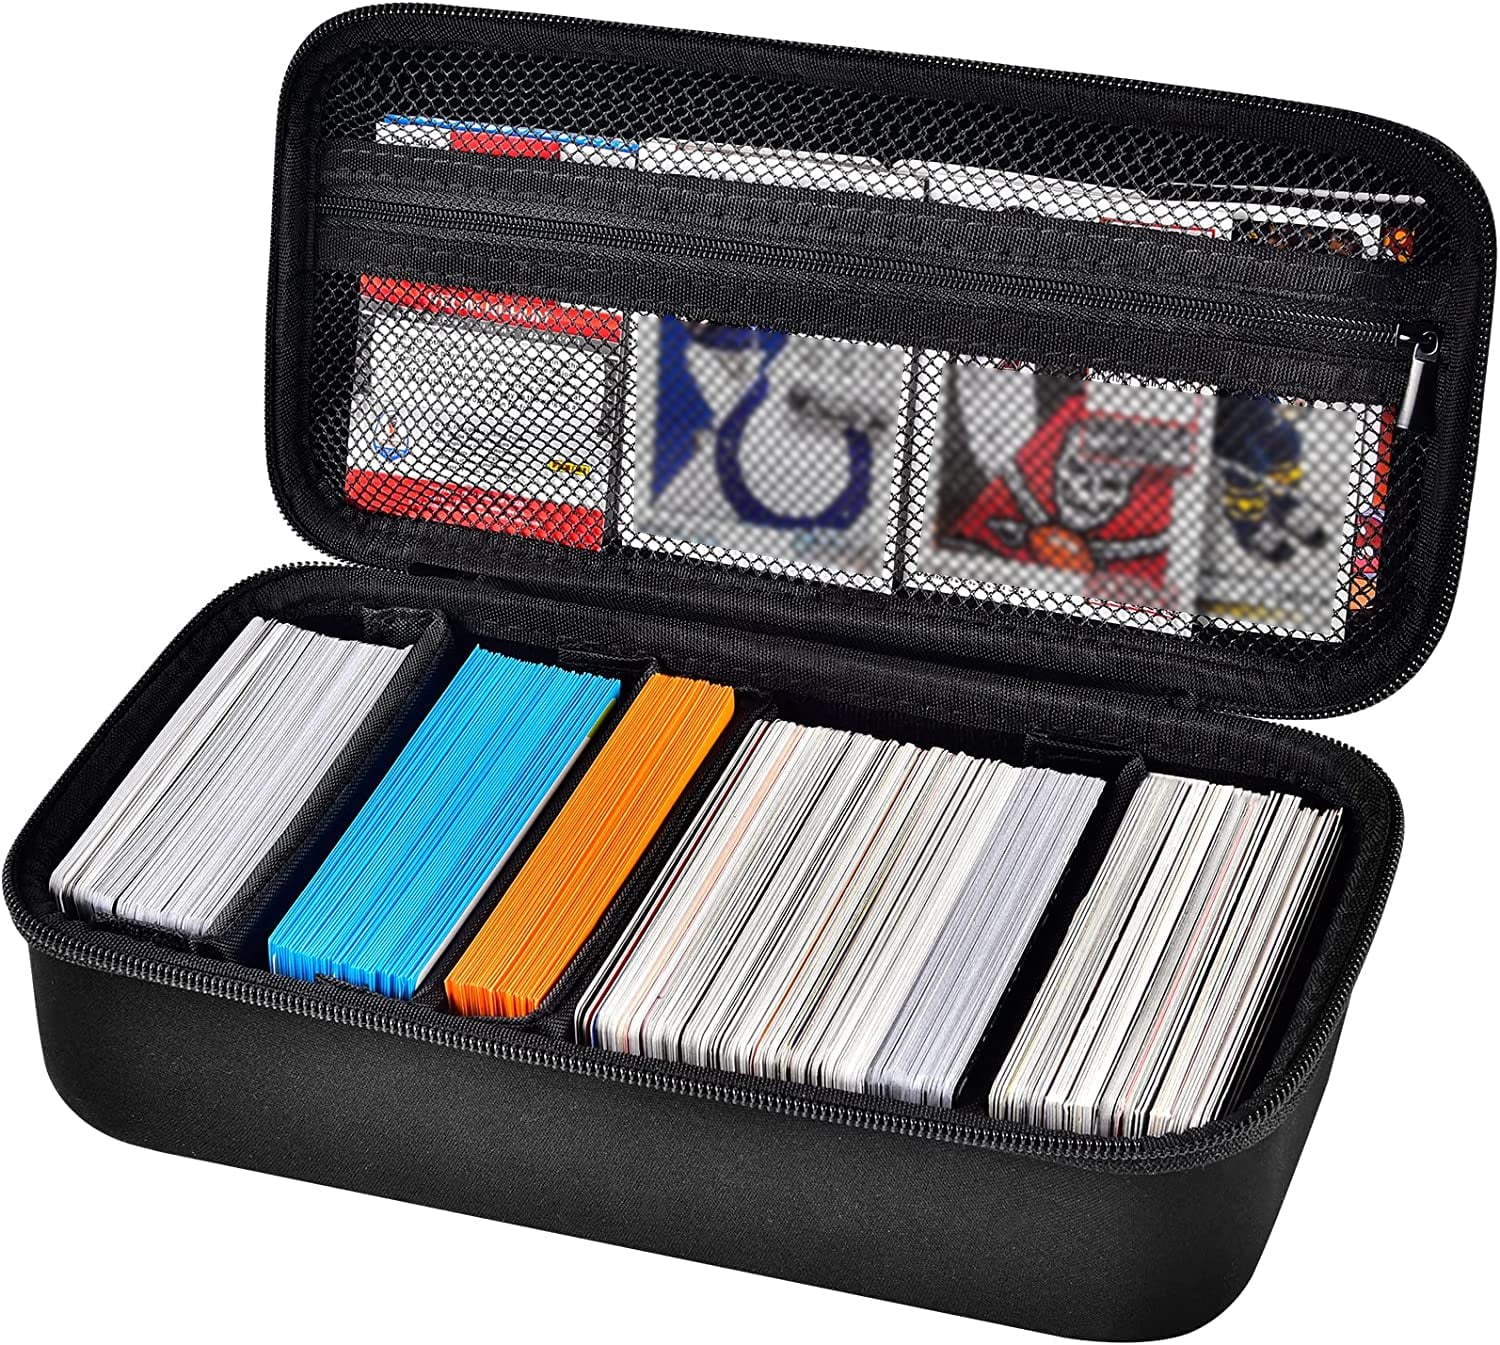 550 Count Cardboard Baseball Trading Card Storage Boxes - Bundle of 50